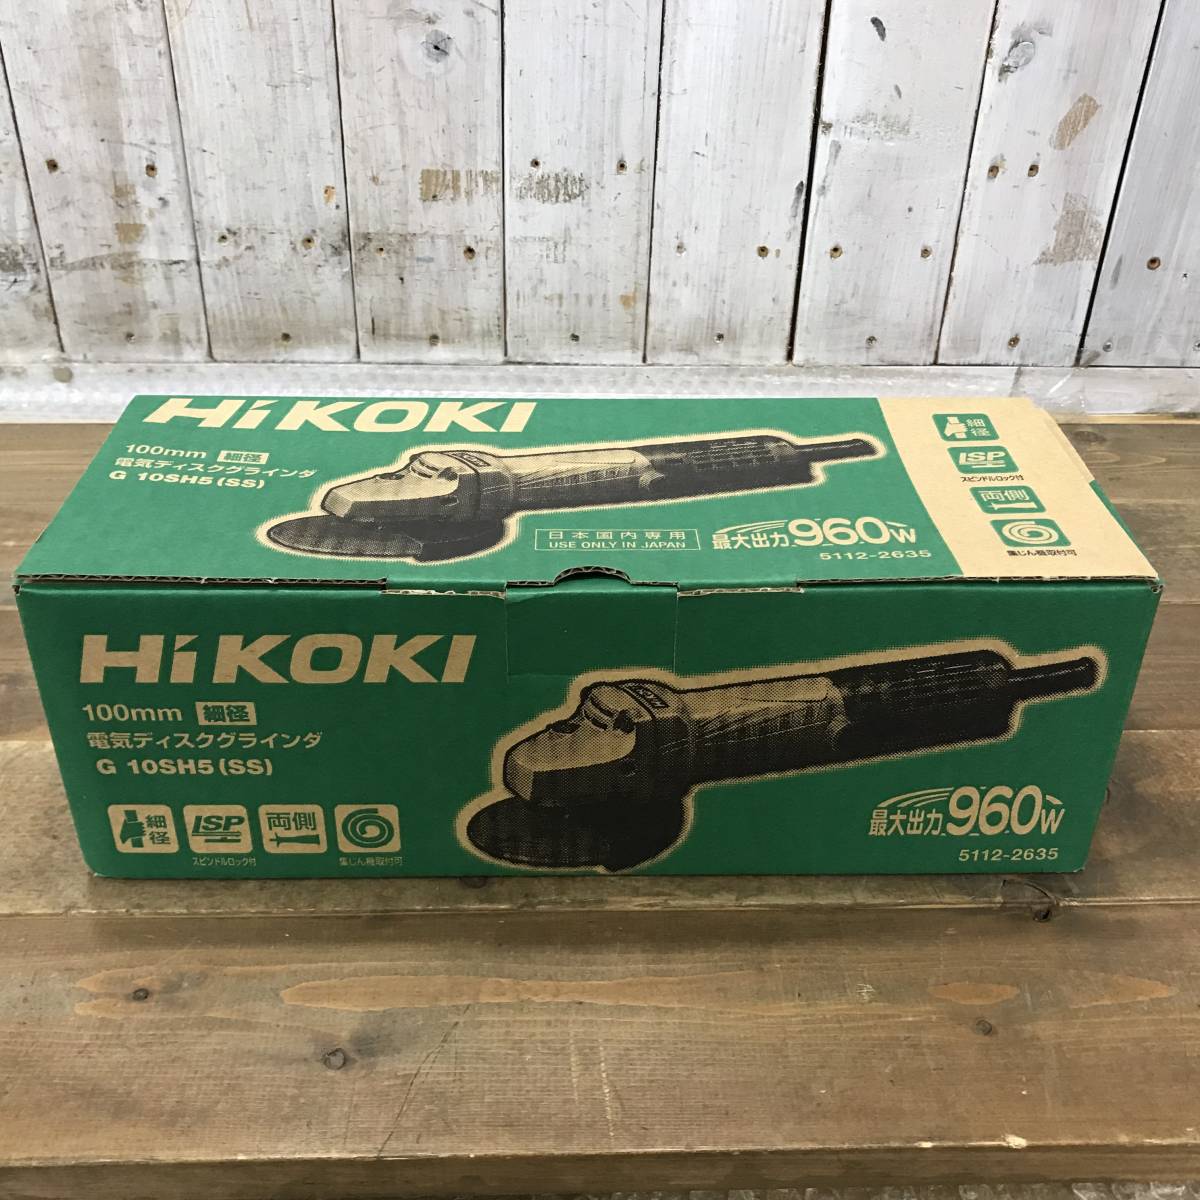 【WH-7801】未使用 HiKOKI ハイコーキ 電気ディスクグラインダ G10SH5(SS) 100V 100mm 旧日立 日立工機